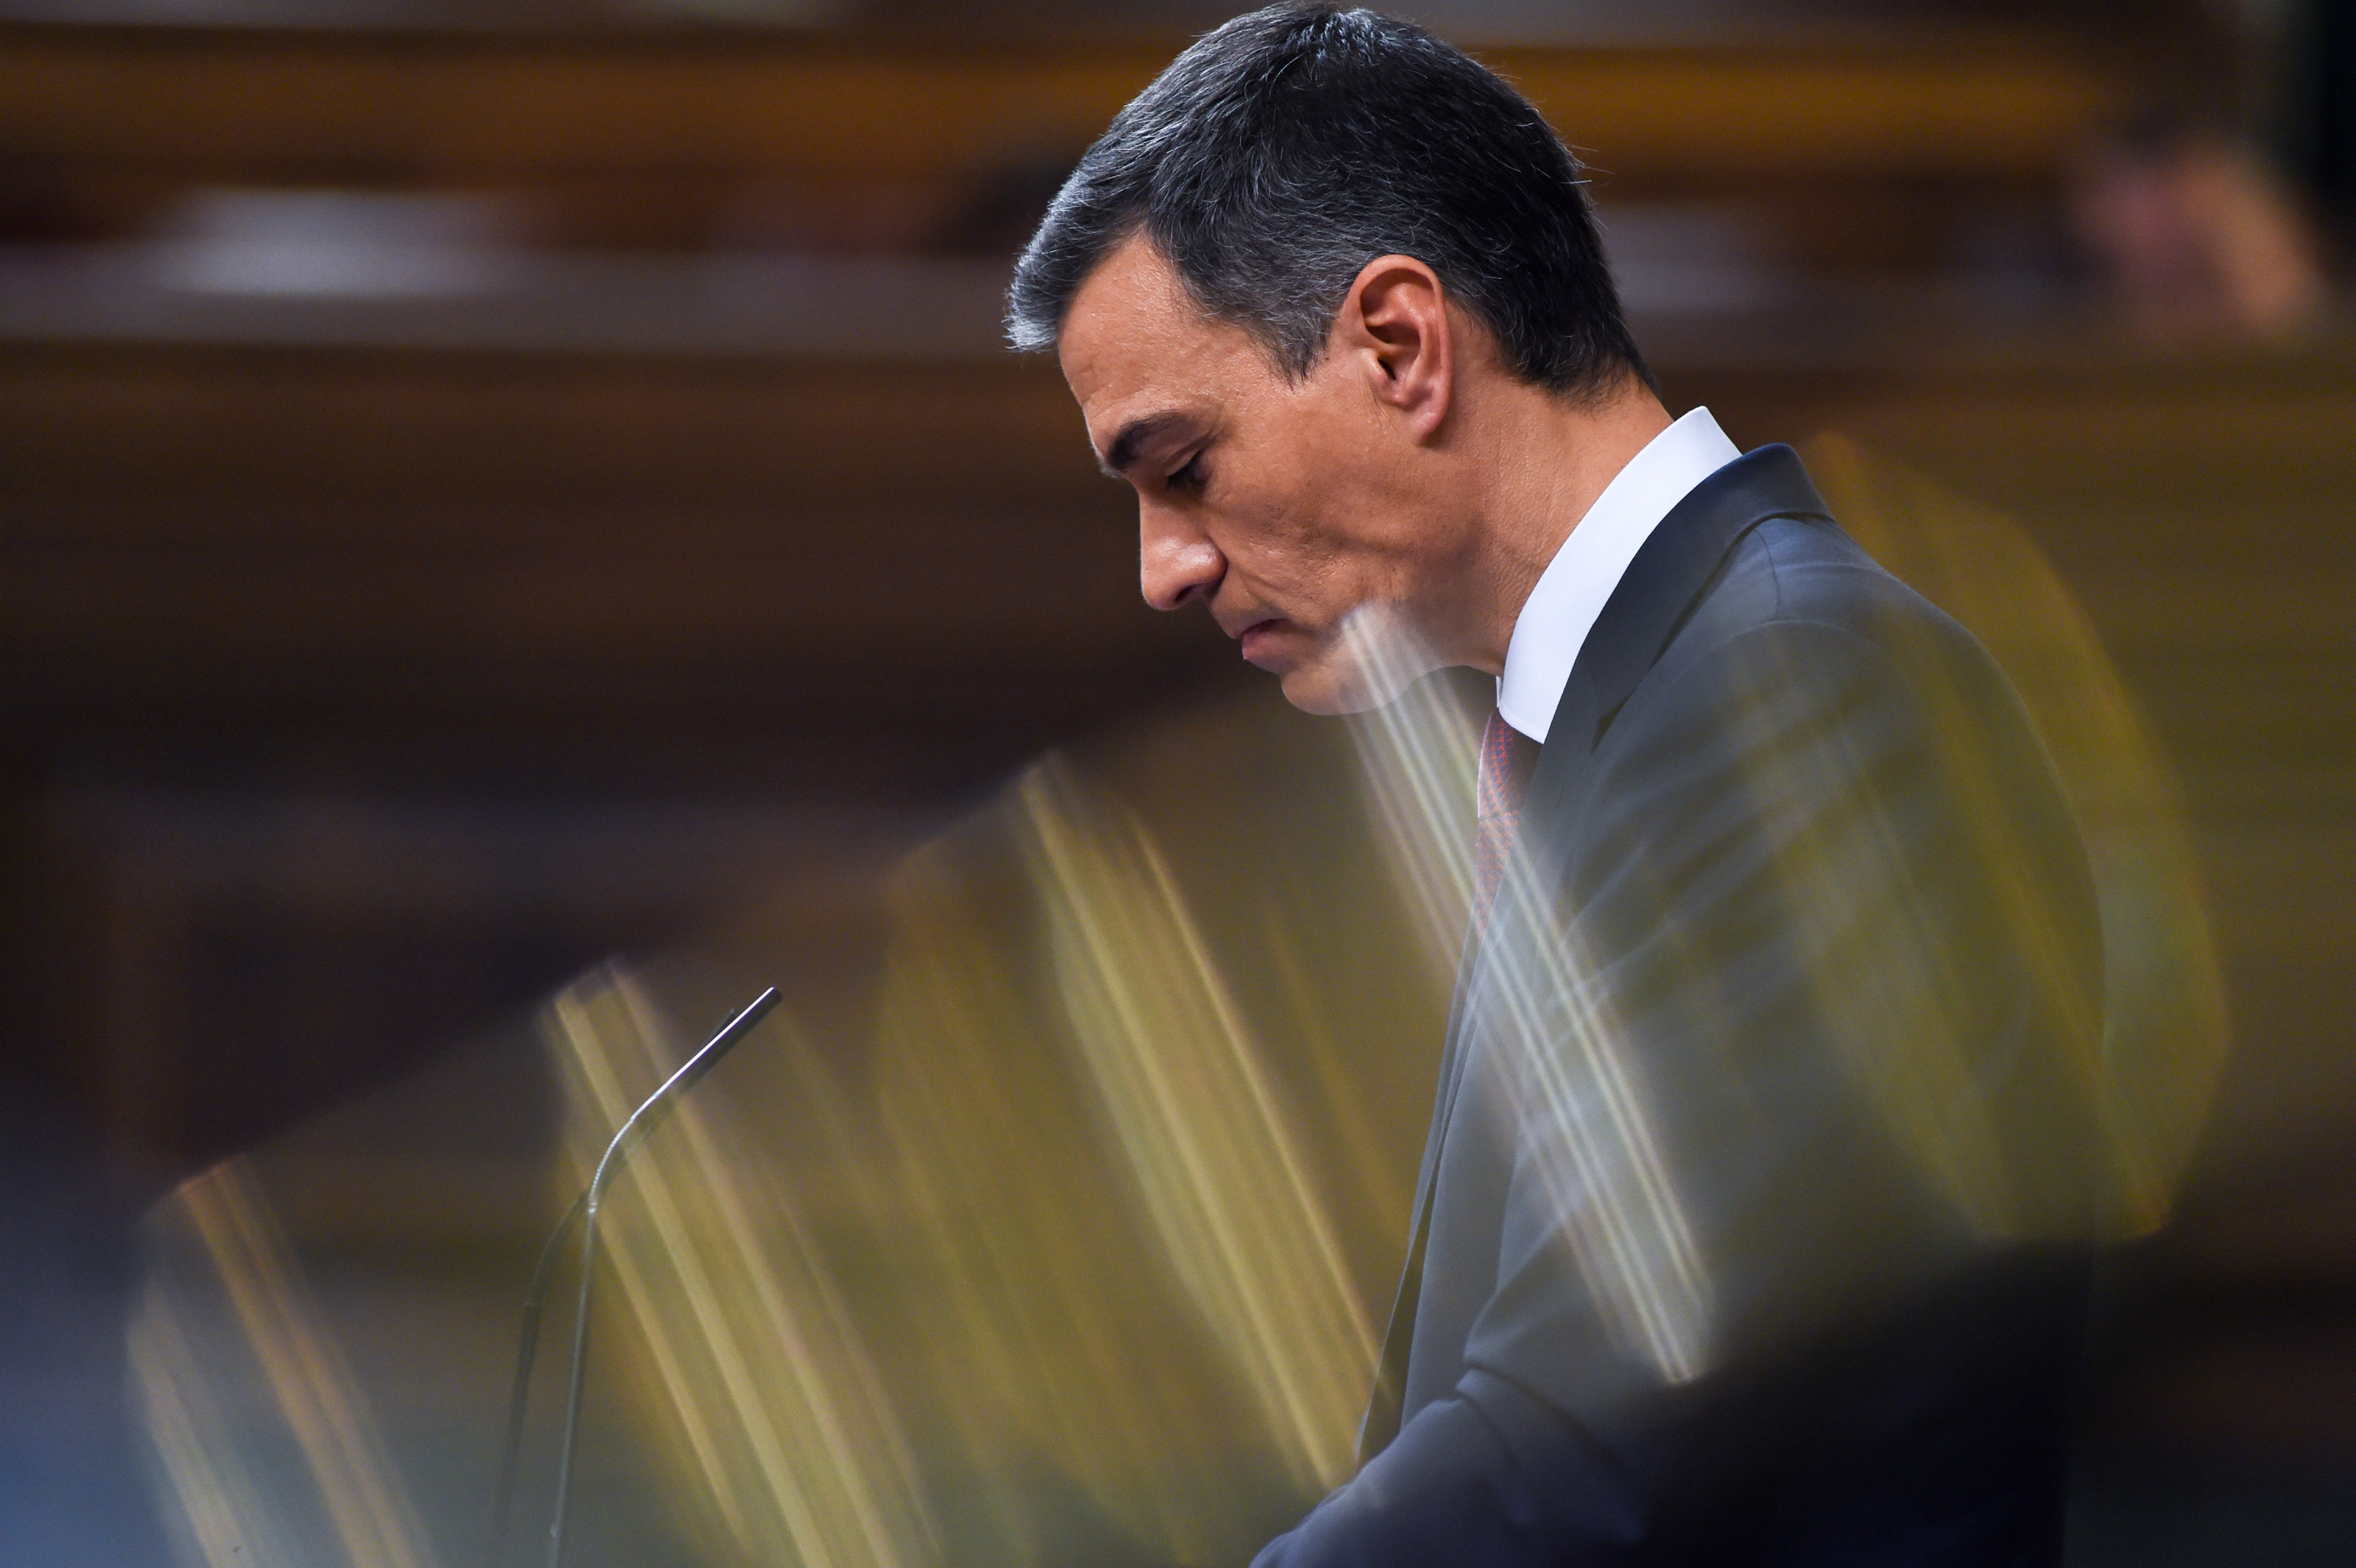 La ruptura Podemos-Sumar dificulta la legislatura a Sánchez: "Tendremos que negociar más"